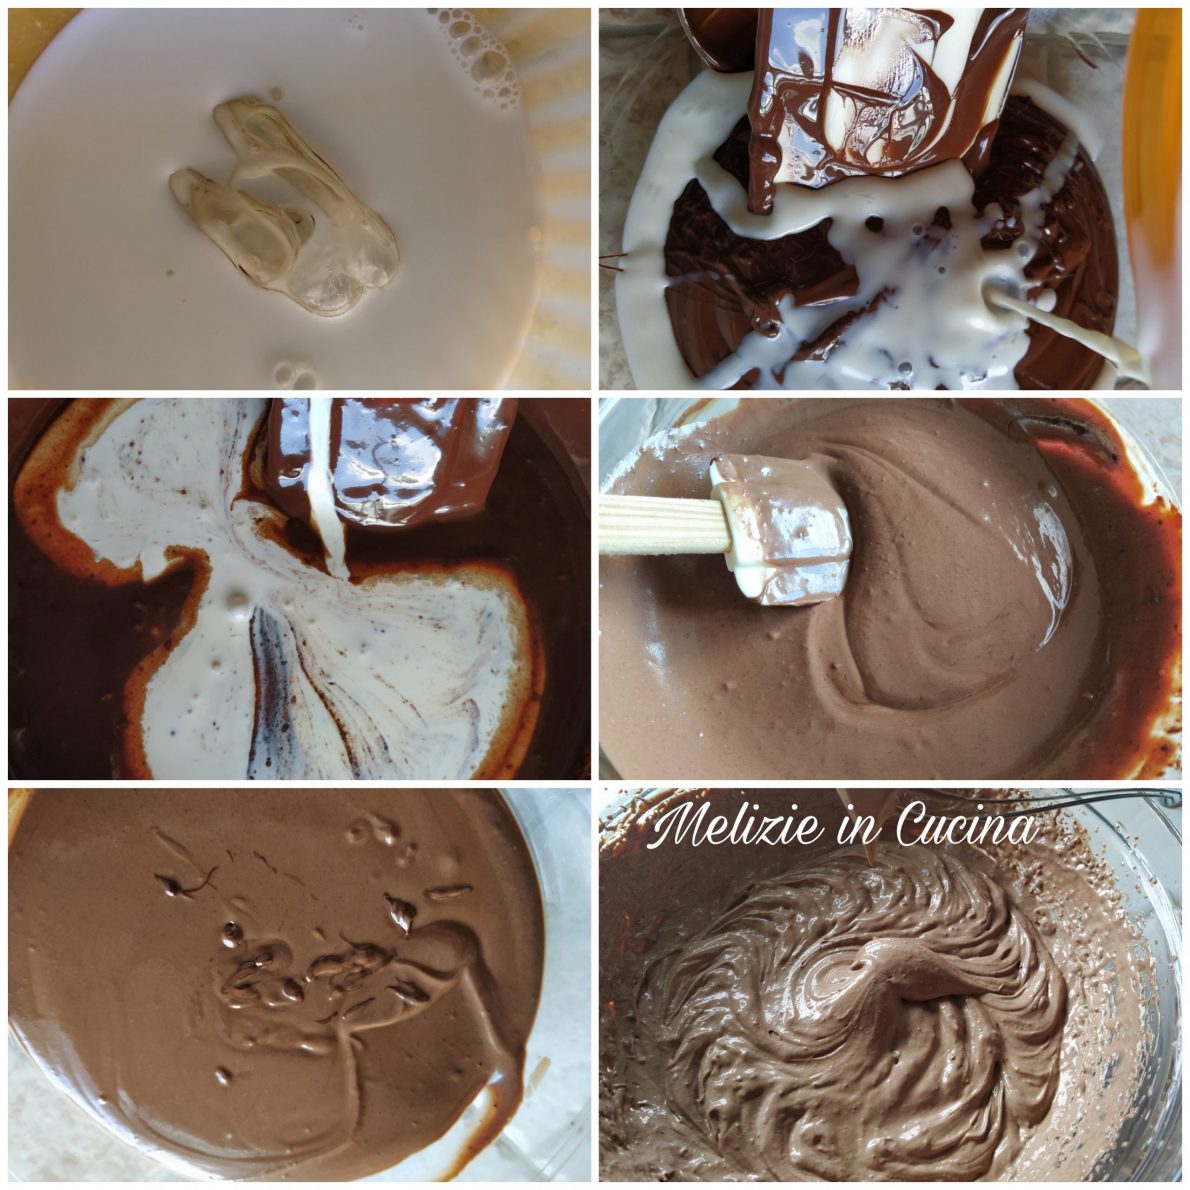 Crema namelaka al cioccolato fondente